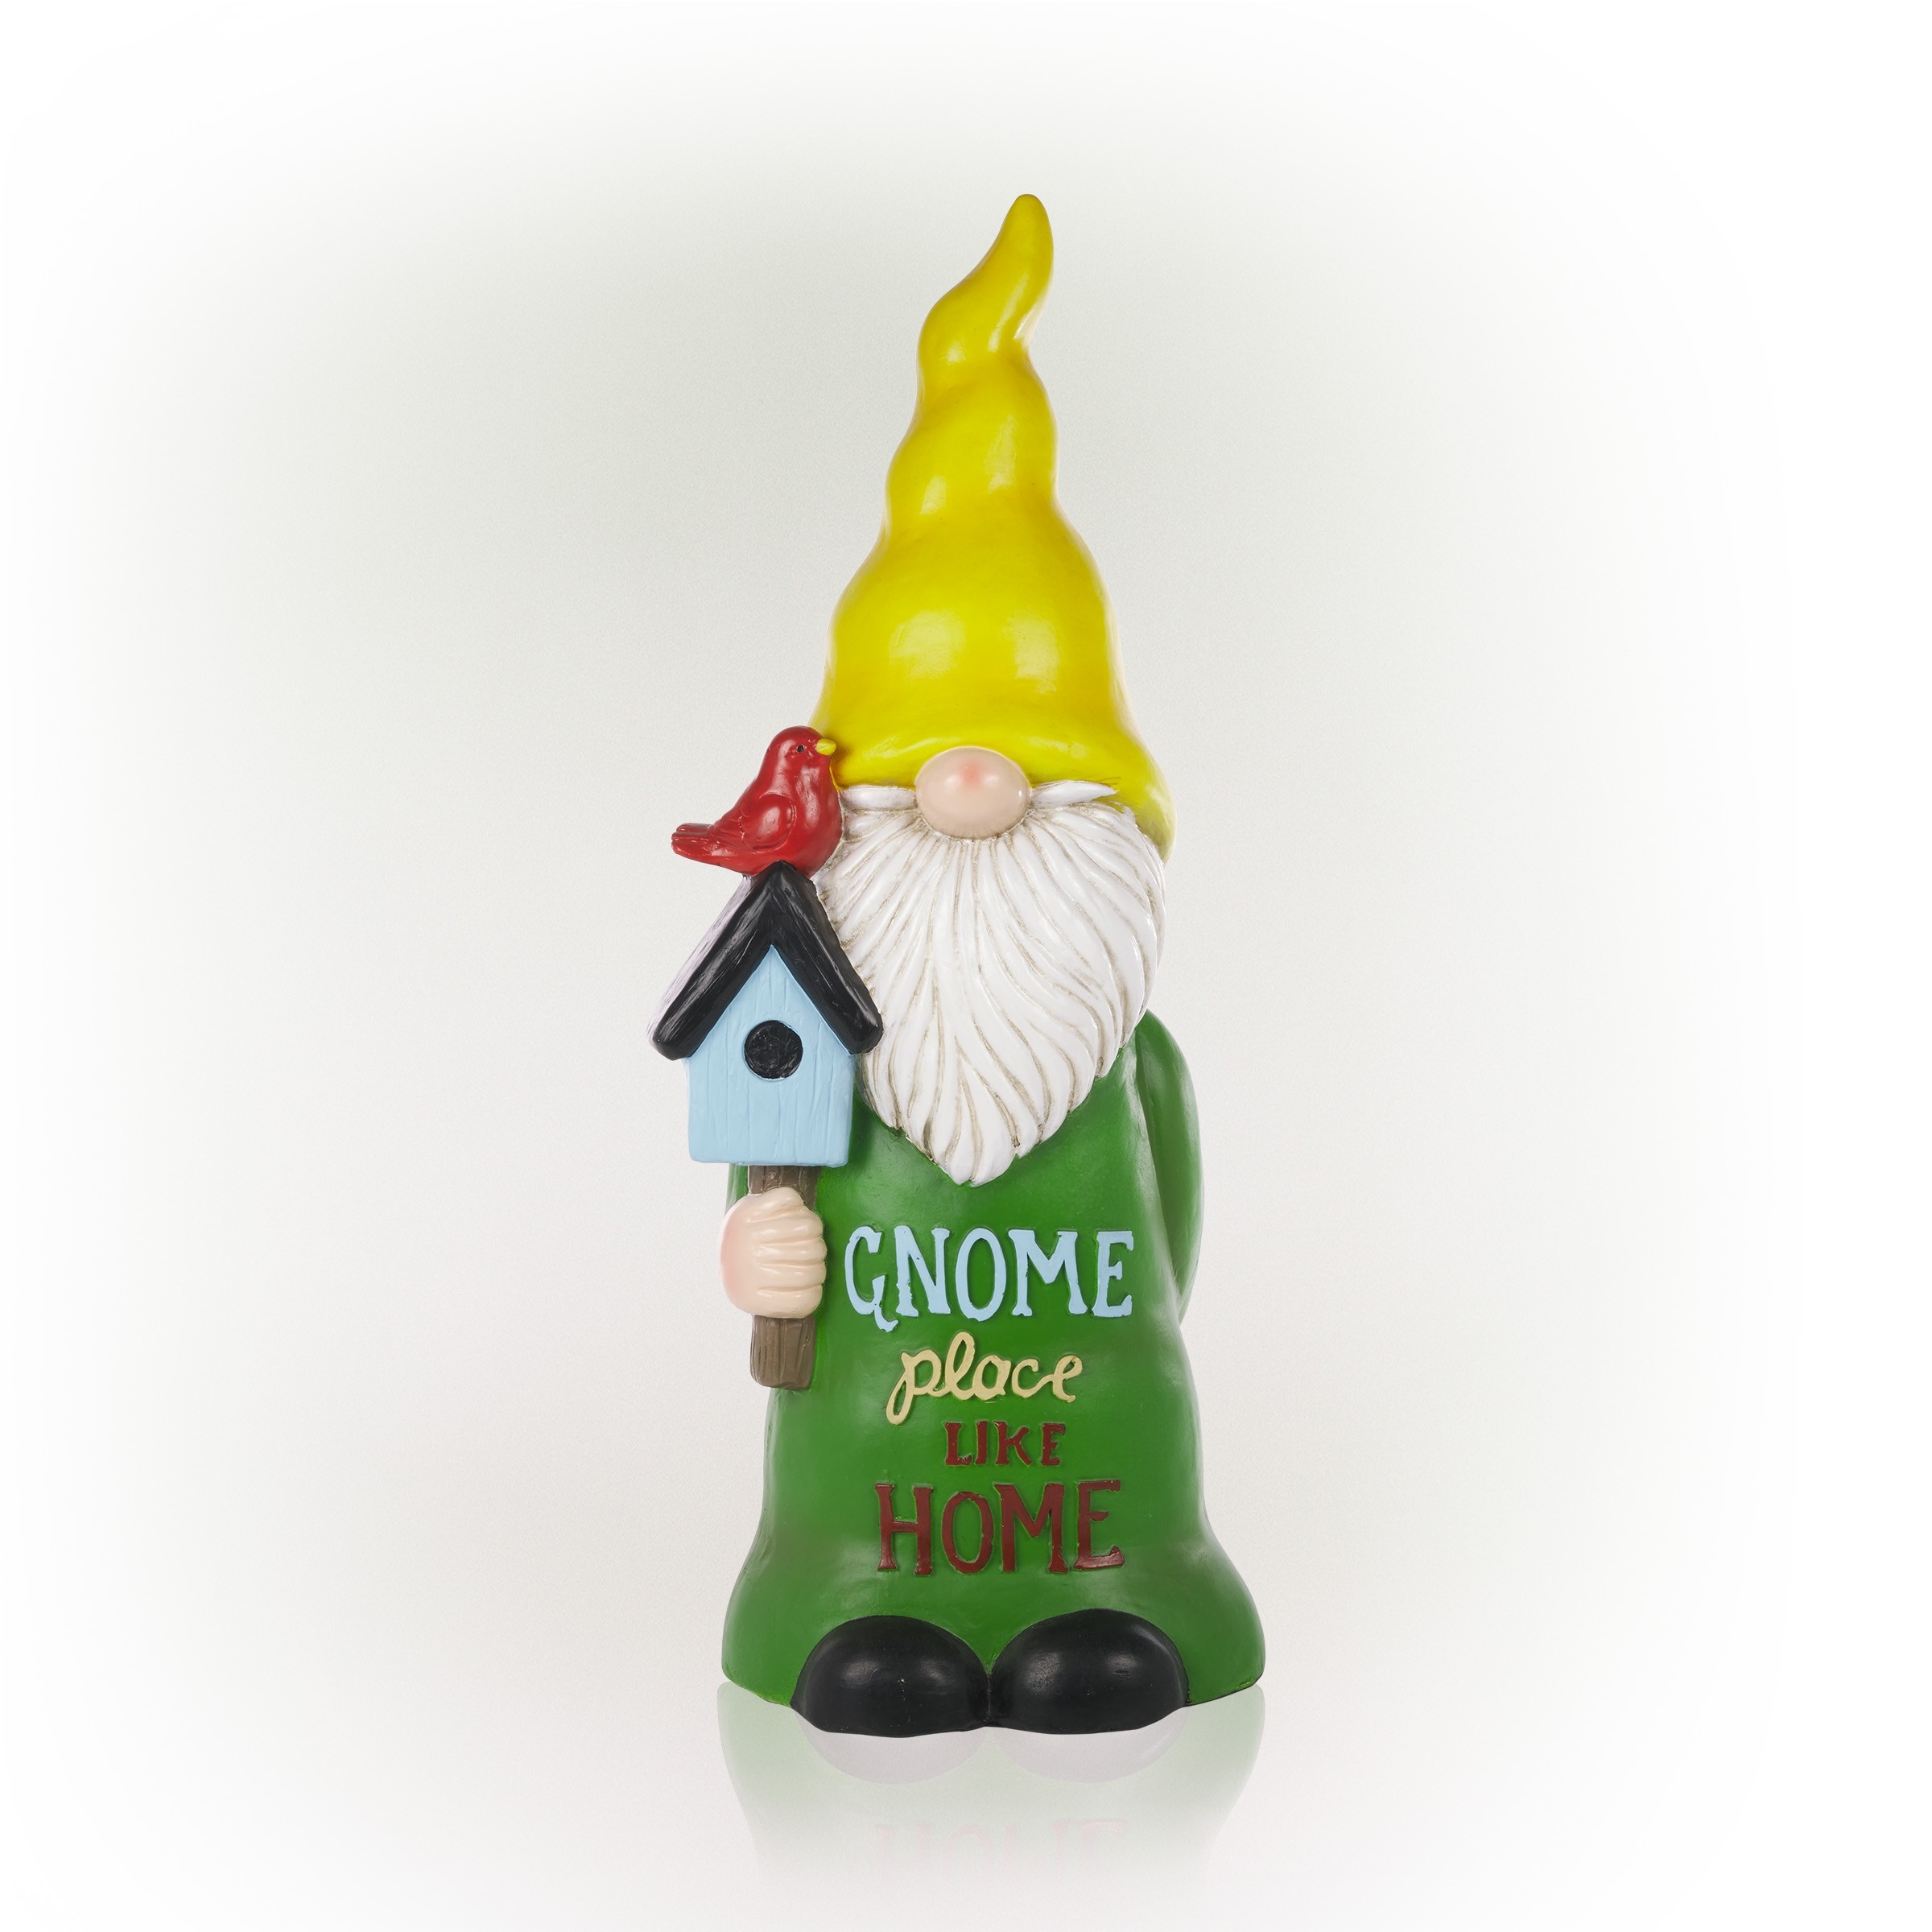 Gnome Place Like Home" Garden Gnome Statue